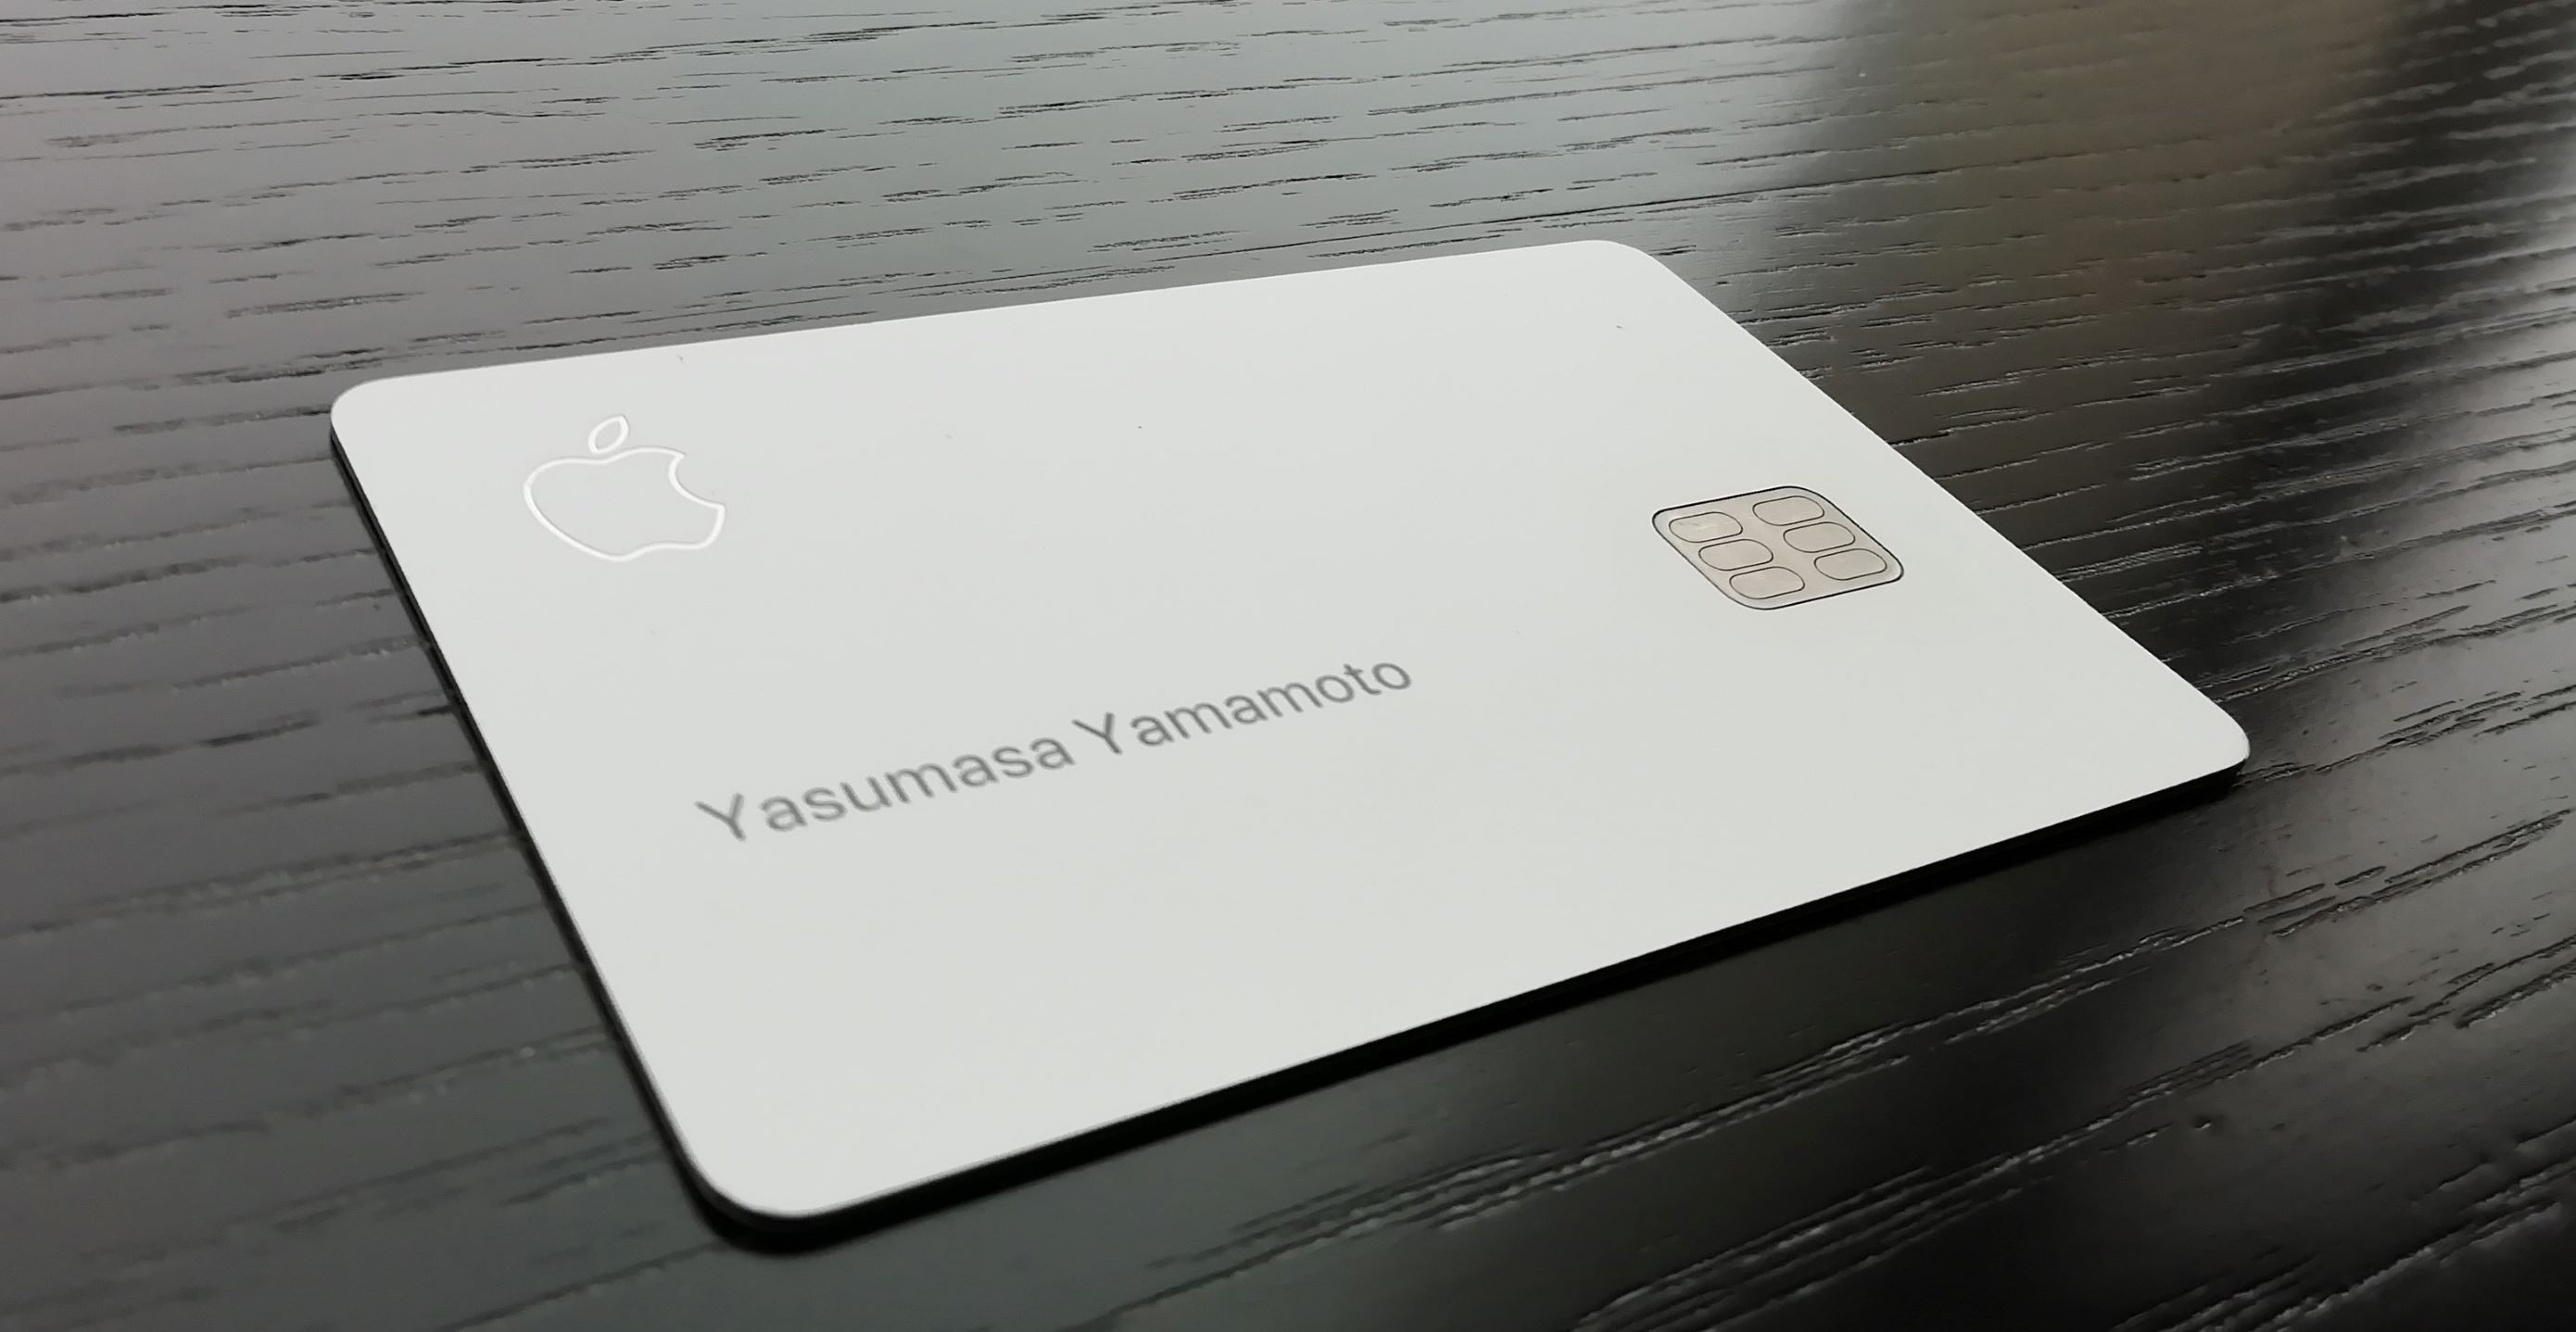 ｢Apple Card｣がシリコンバレーに与えた衝撃 利益度外視でアップルが金融に参入する理由 | 金融業界 | 東洋経済オンライン